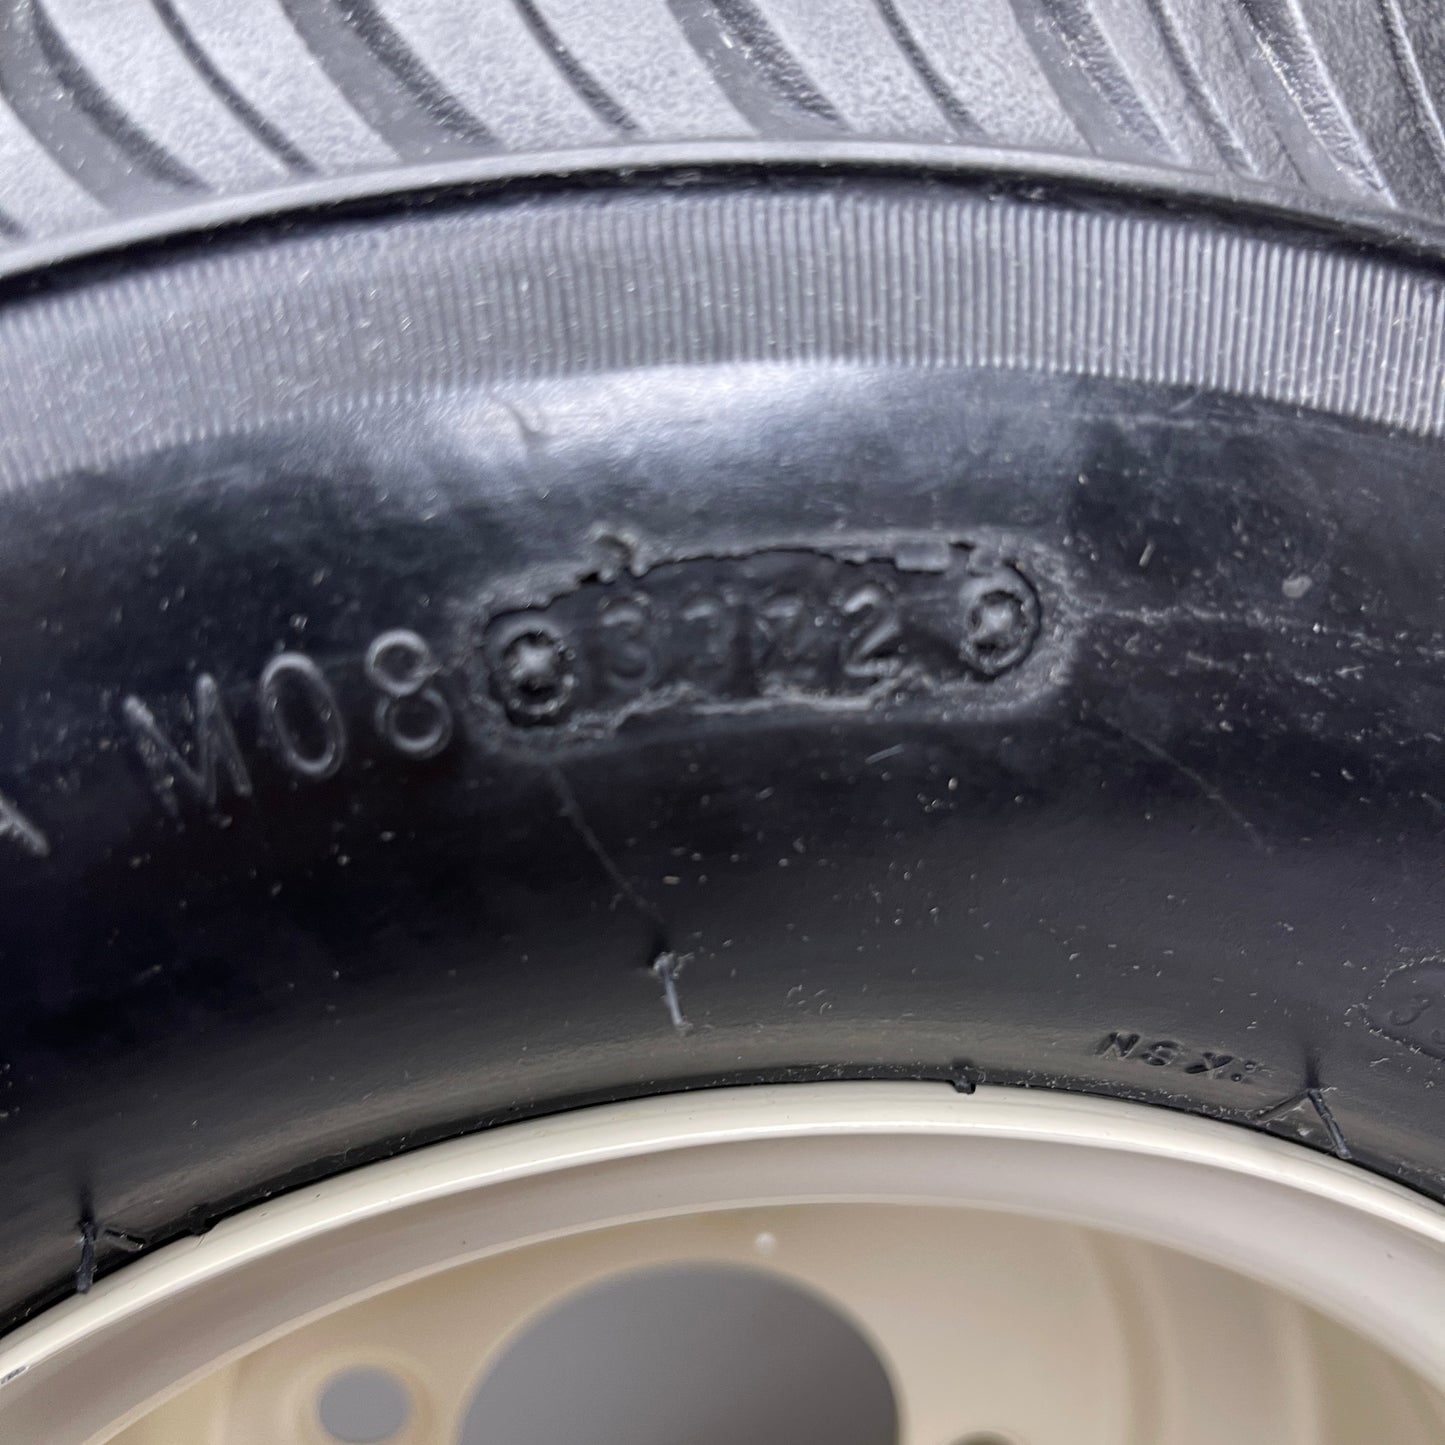 LOADSTAR 215/60-8 4-Hole White Rim Trailer Tire and Beige Wheel (New)